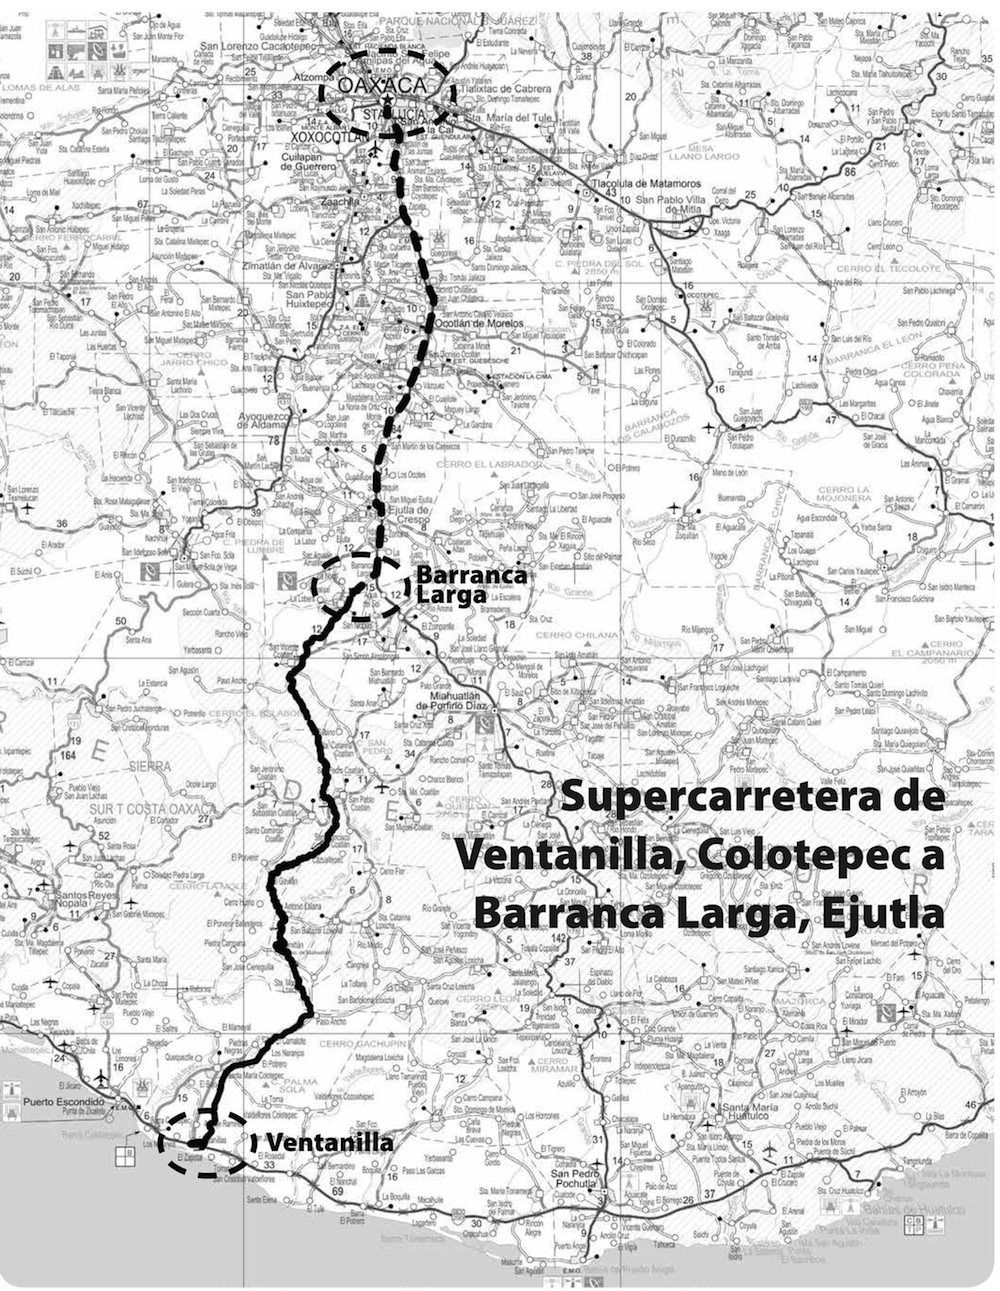 Imagine: A Super Highway
      To Oaxaca